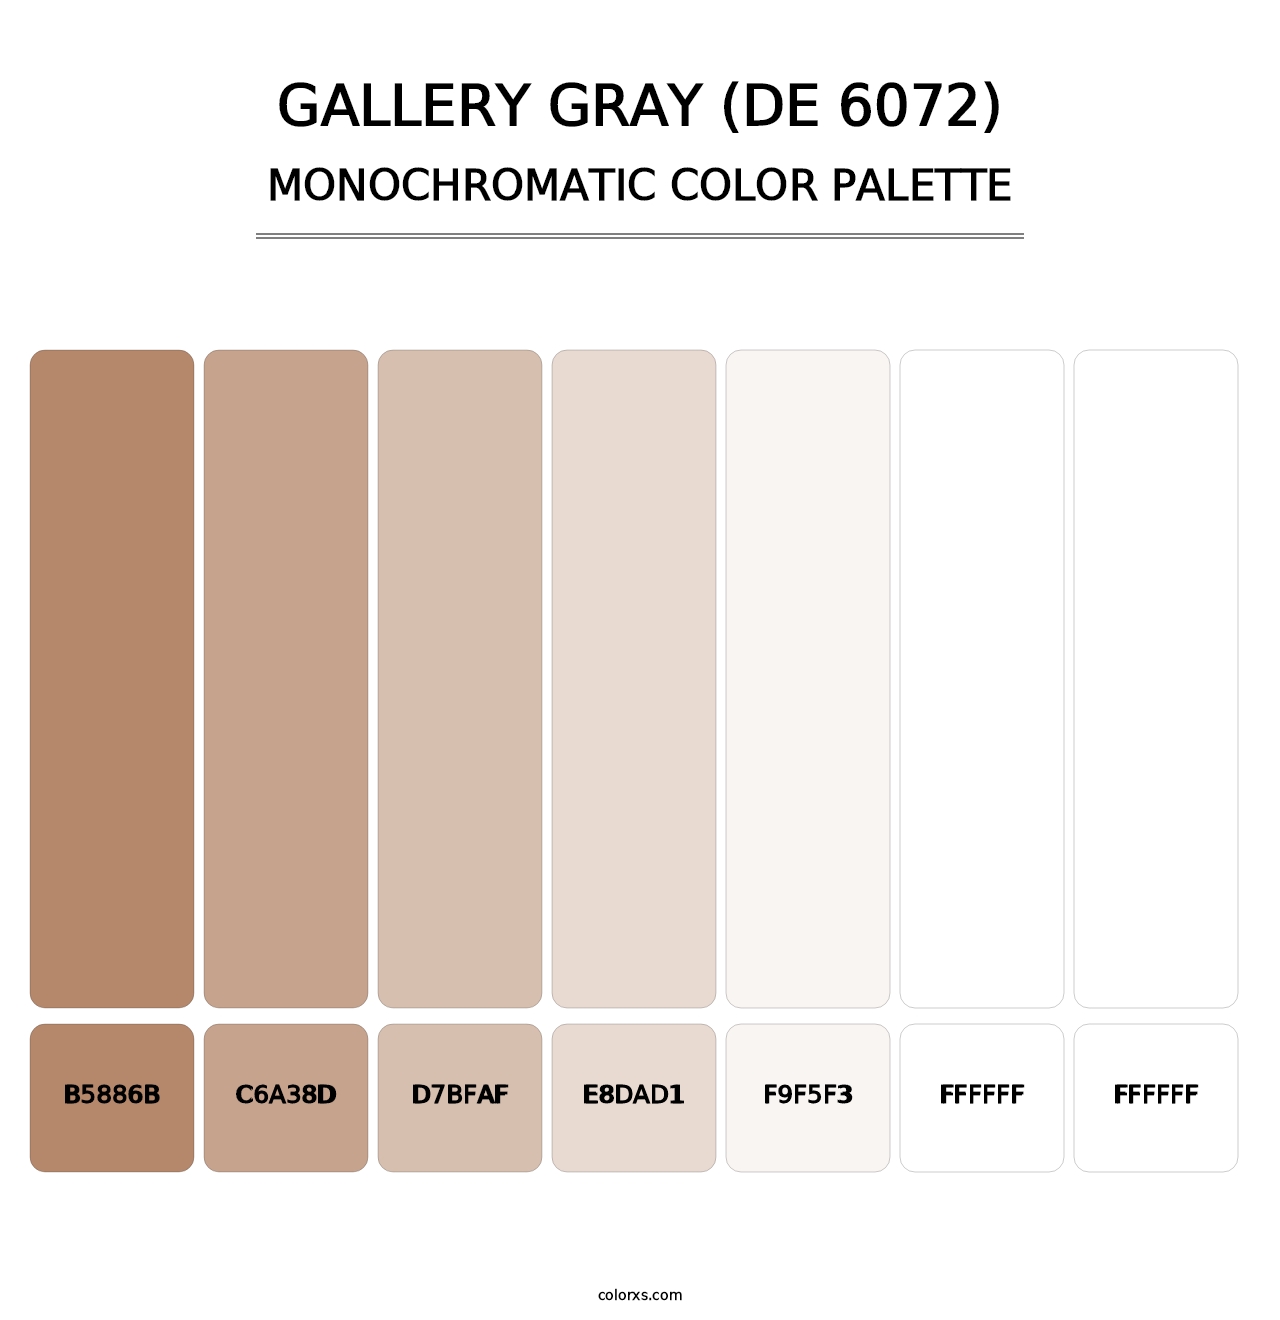 Gallery Gray (DE 6072) - Monochromatic Color Palette